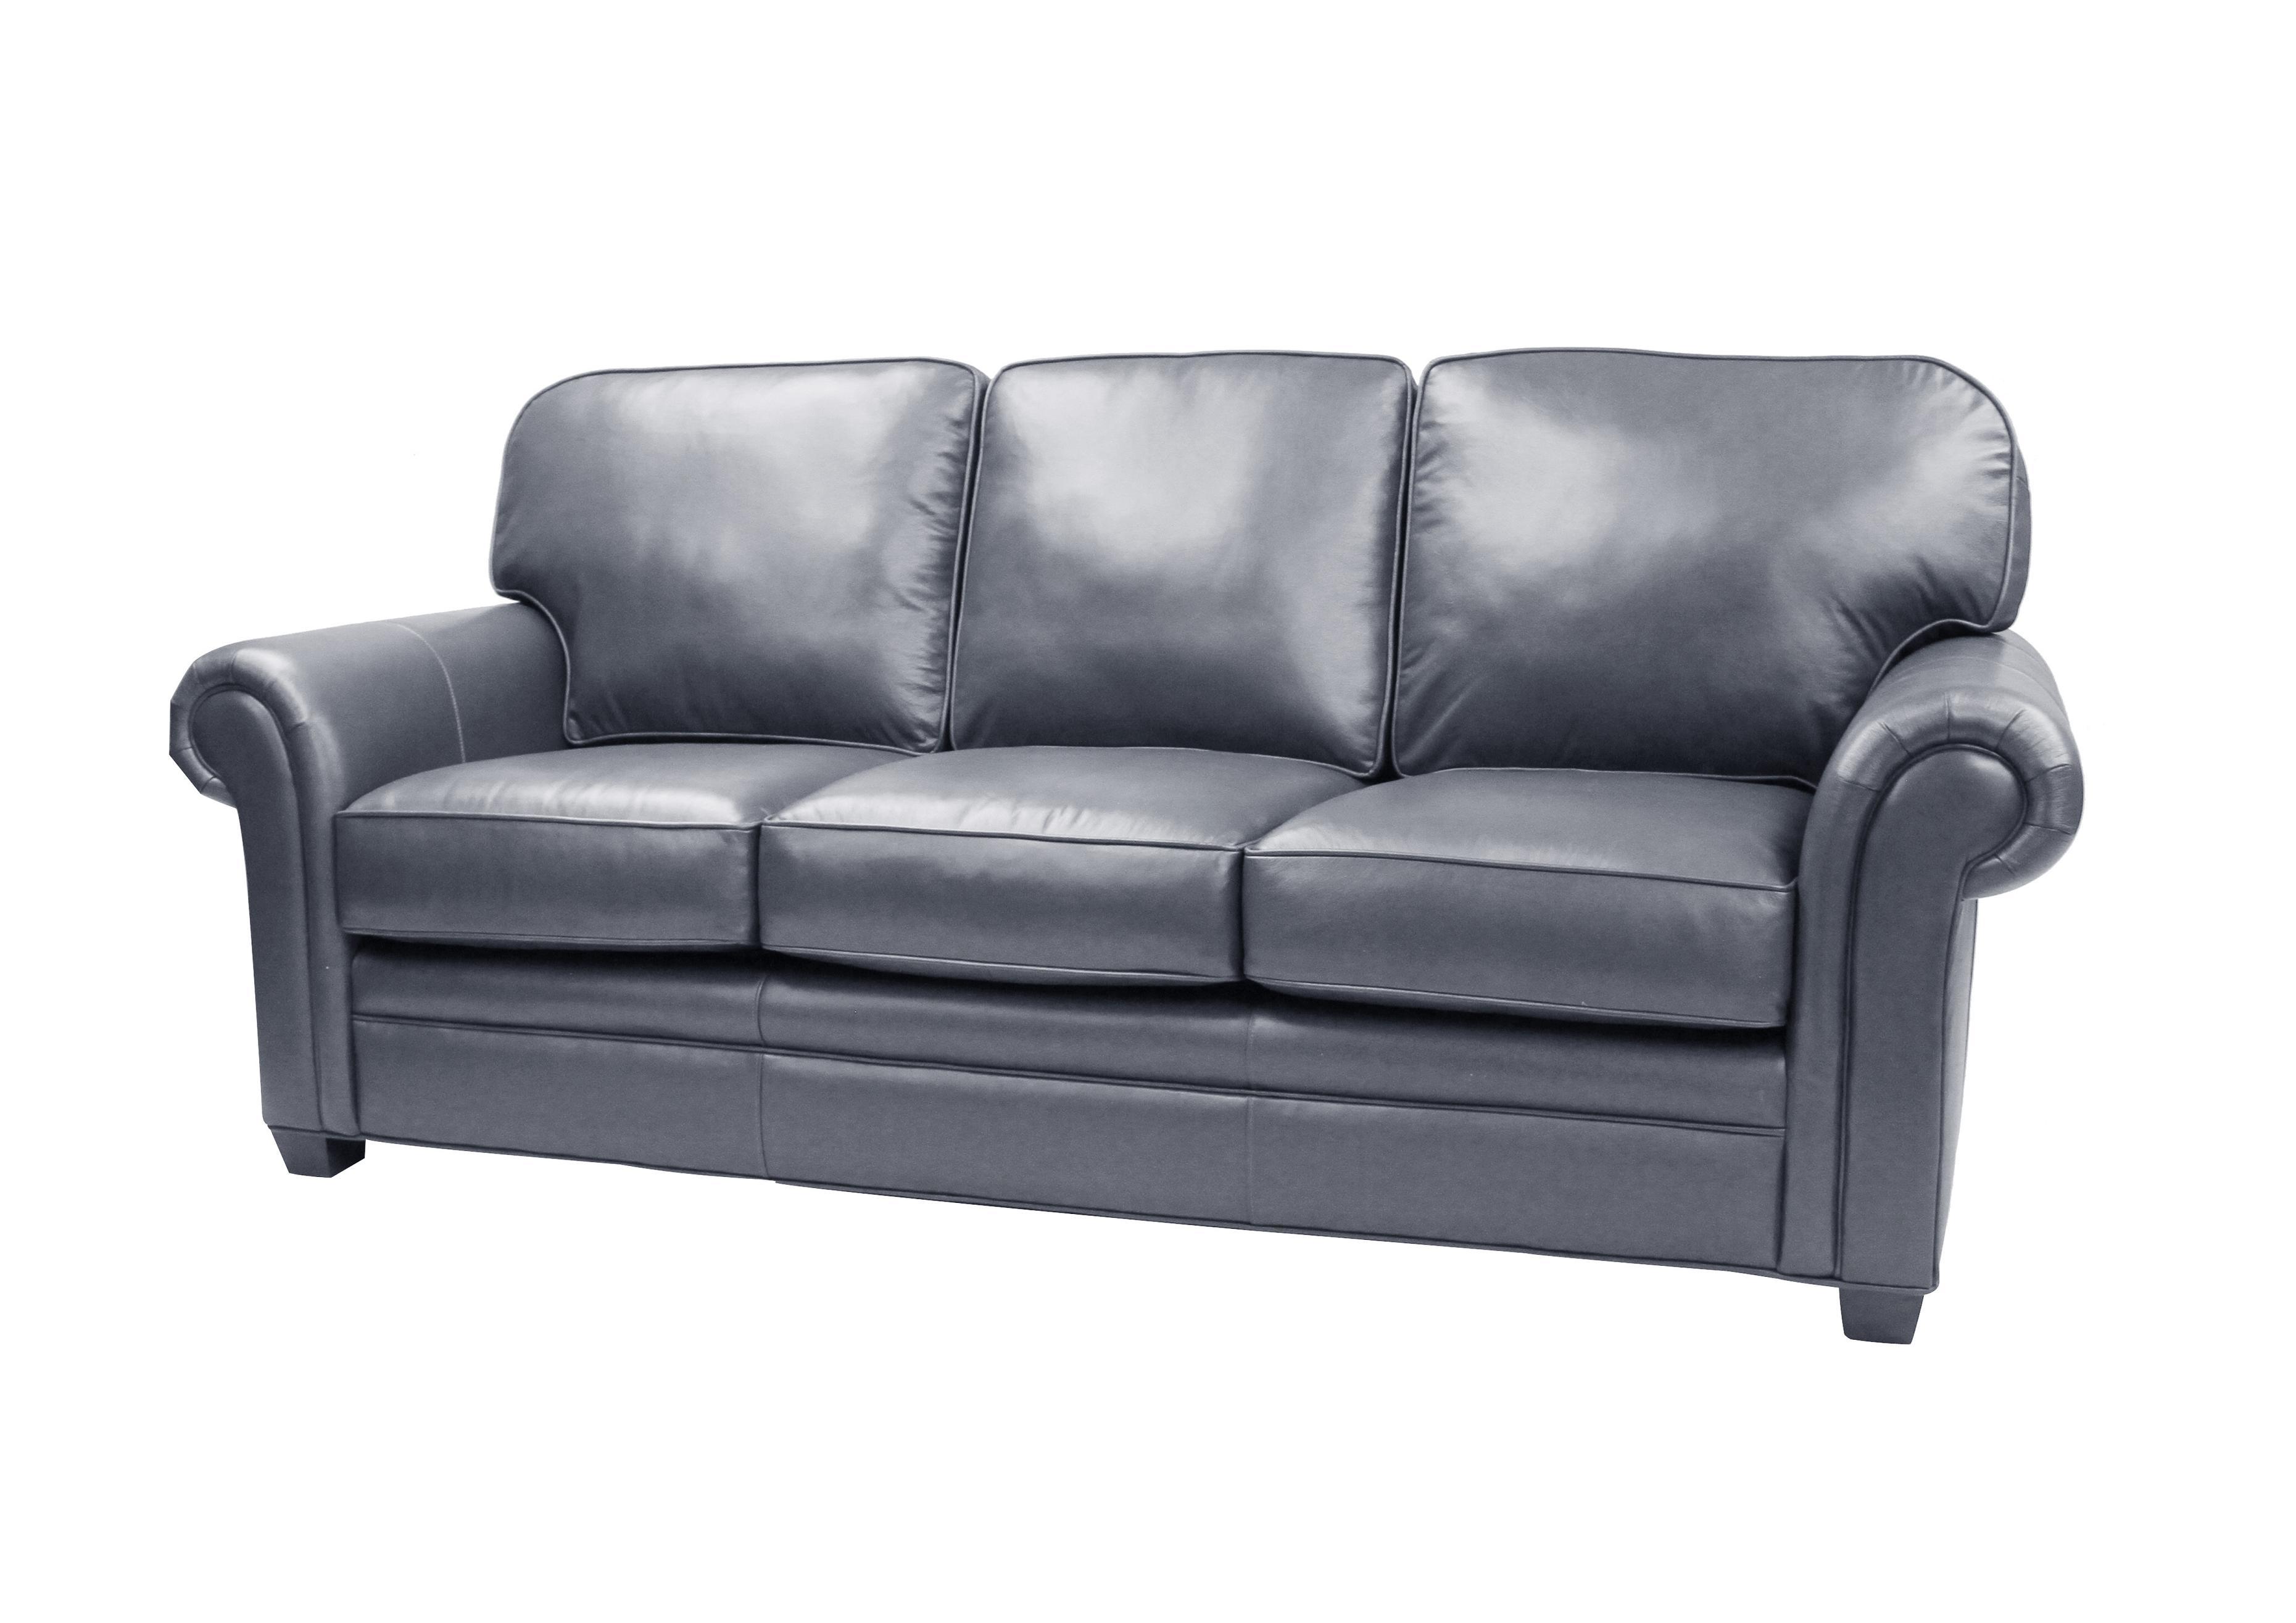 Living Room Furniture Navy Blue Leather Sofa Furniture